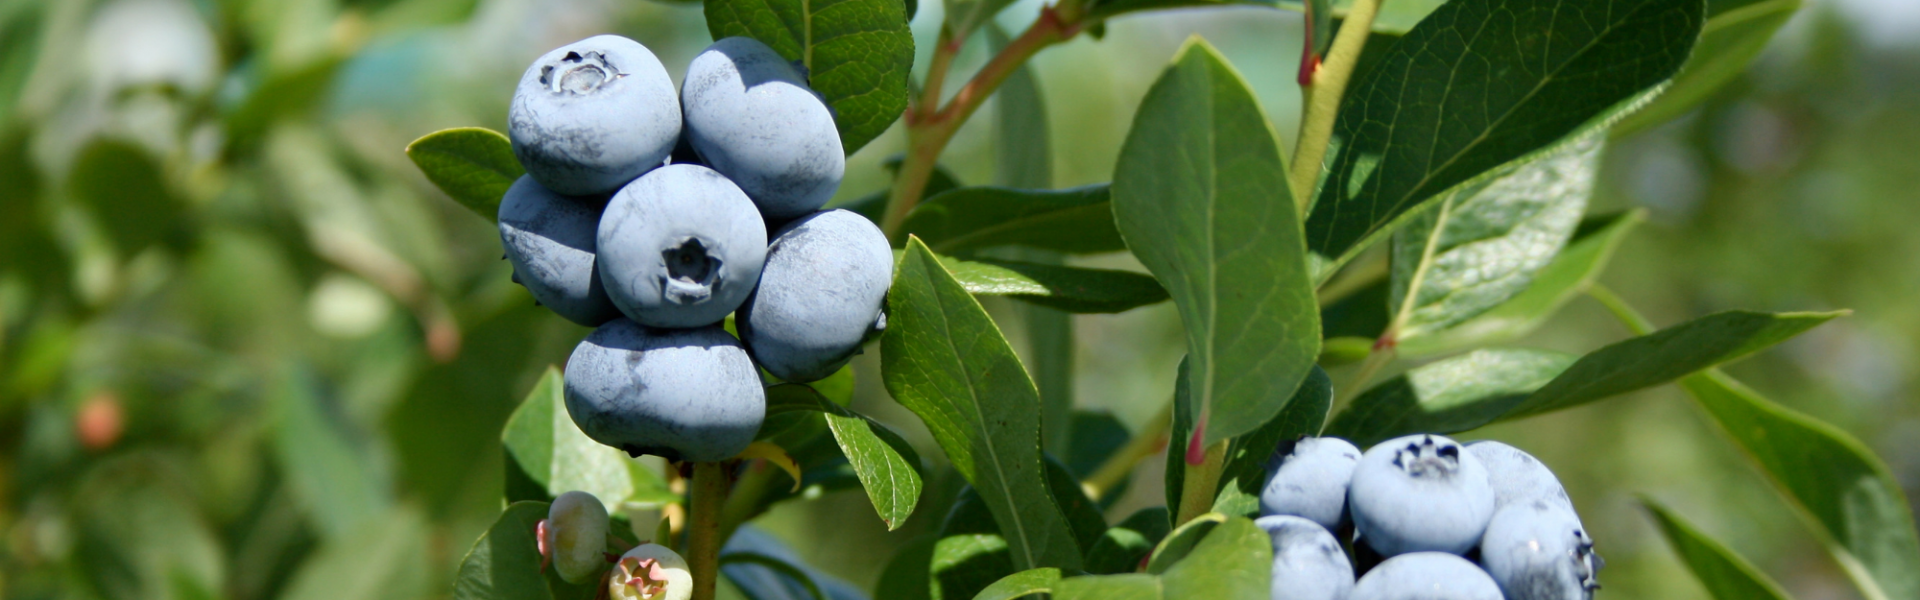 blueberries ripening on bush